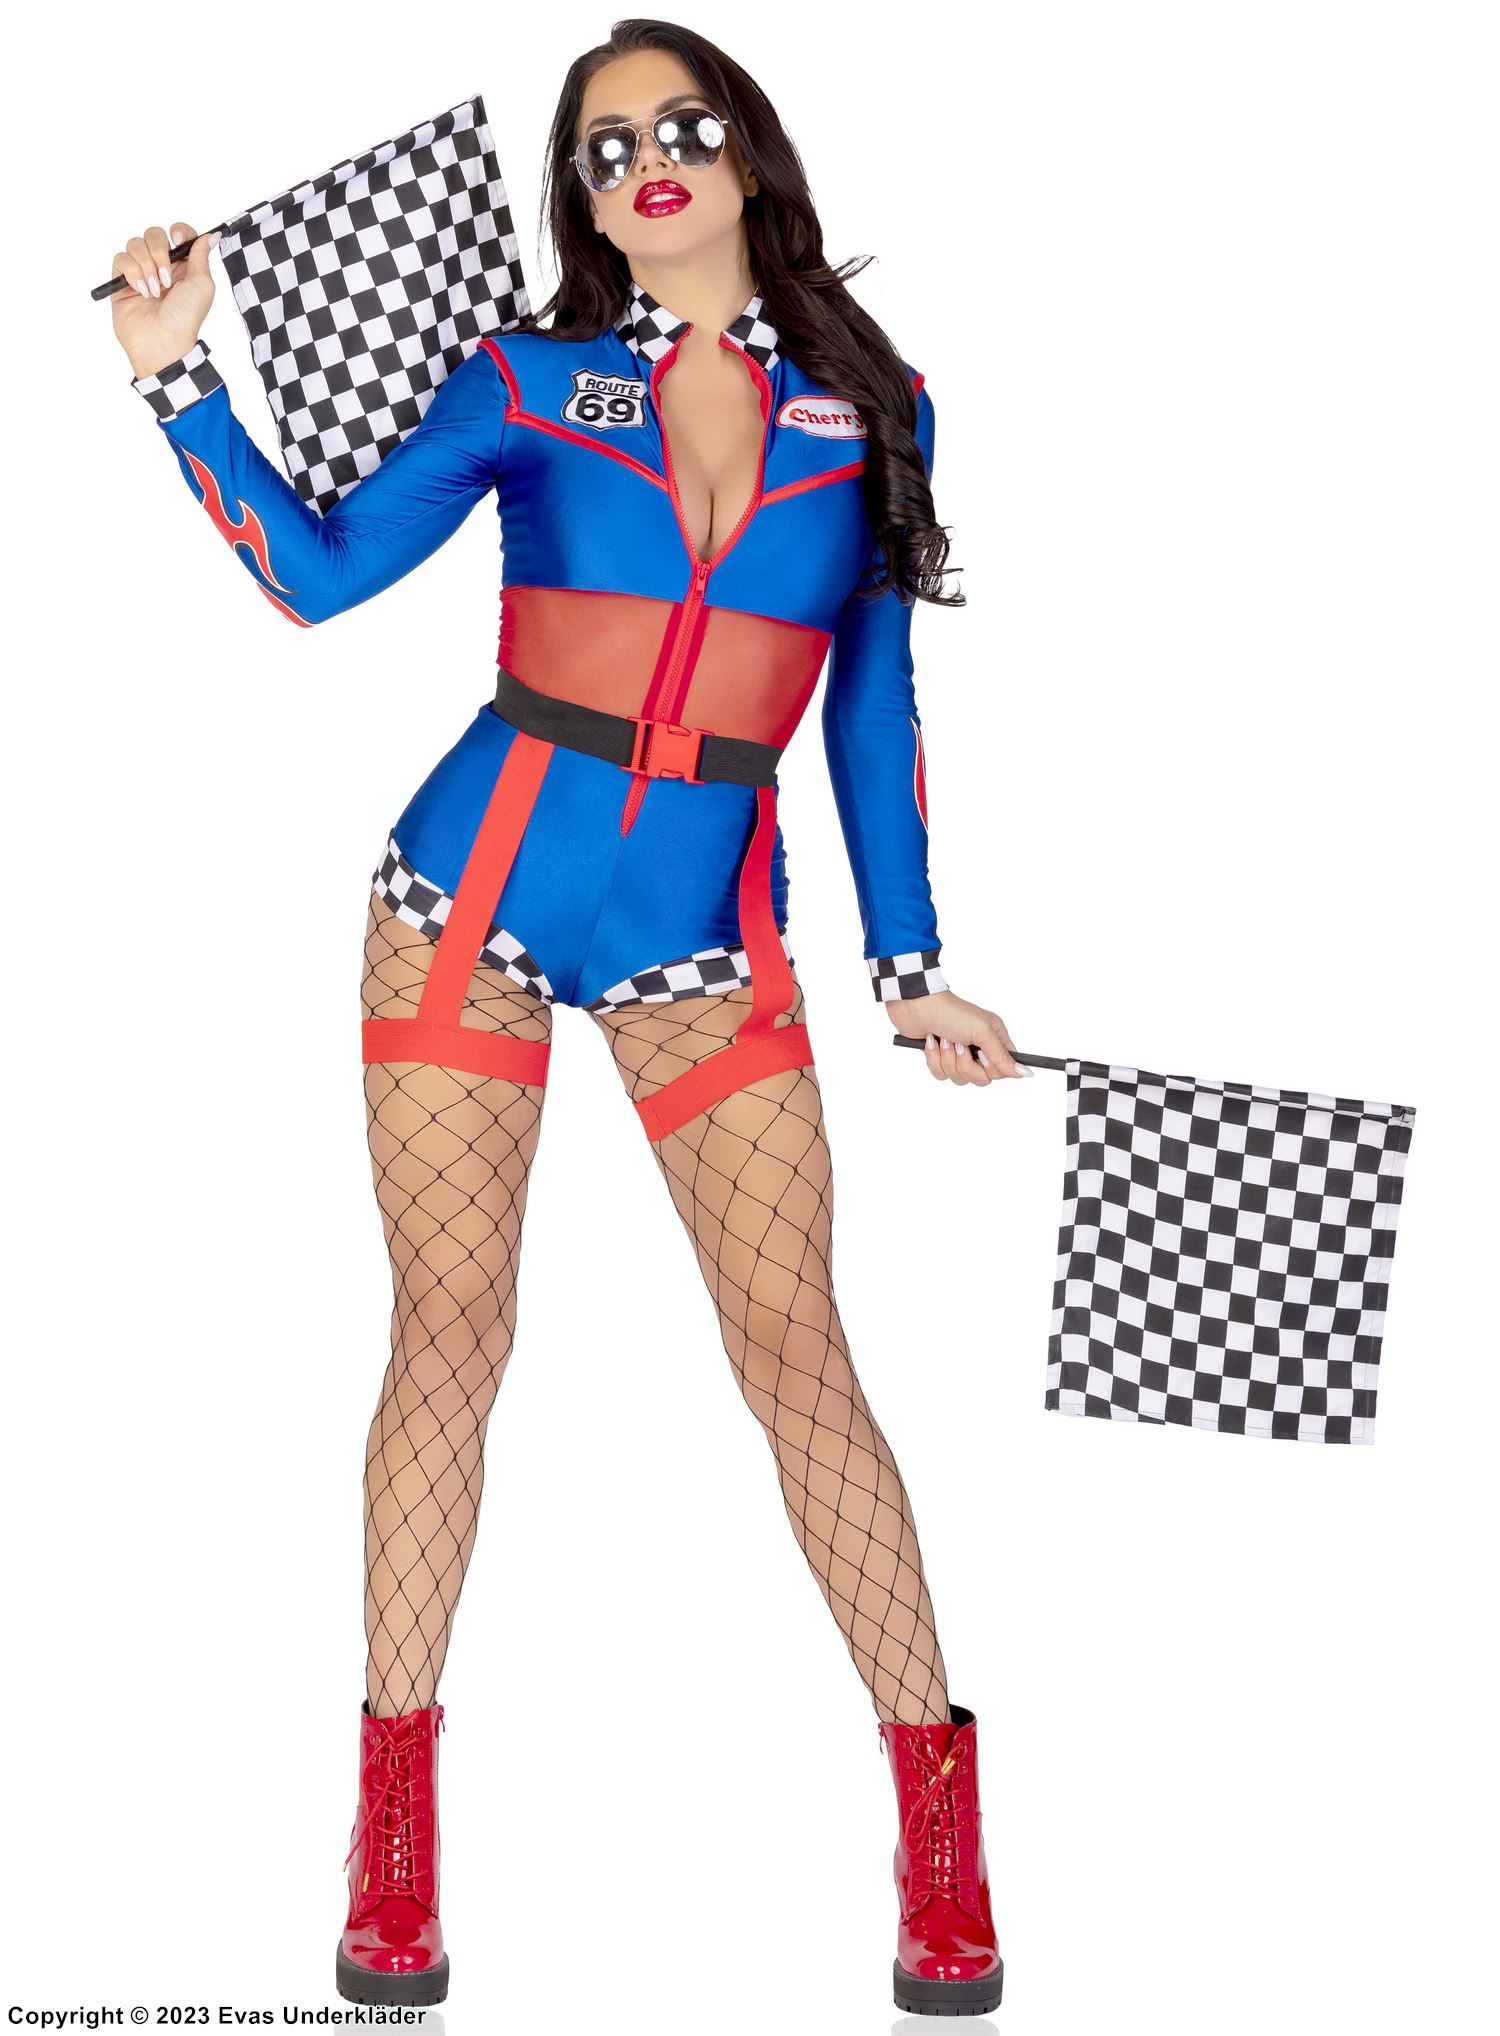 Female racer, costume romper, long sleeves, front zipper, checkered pattern